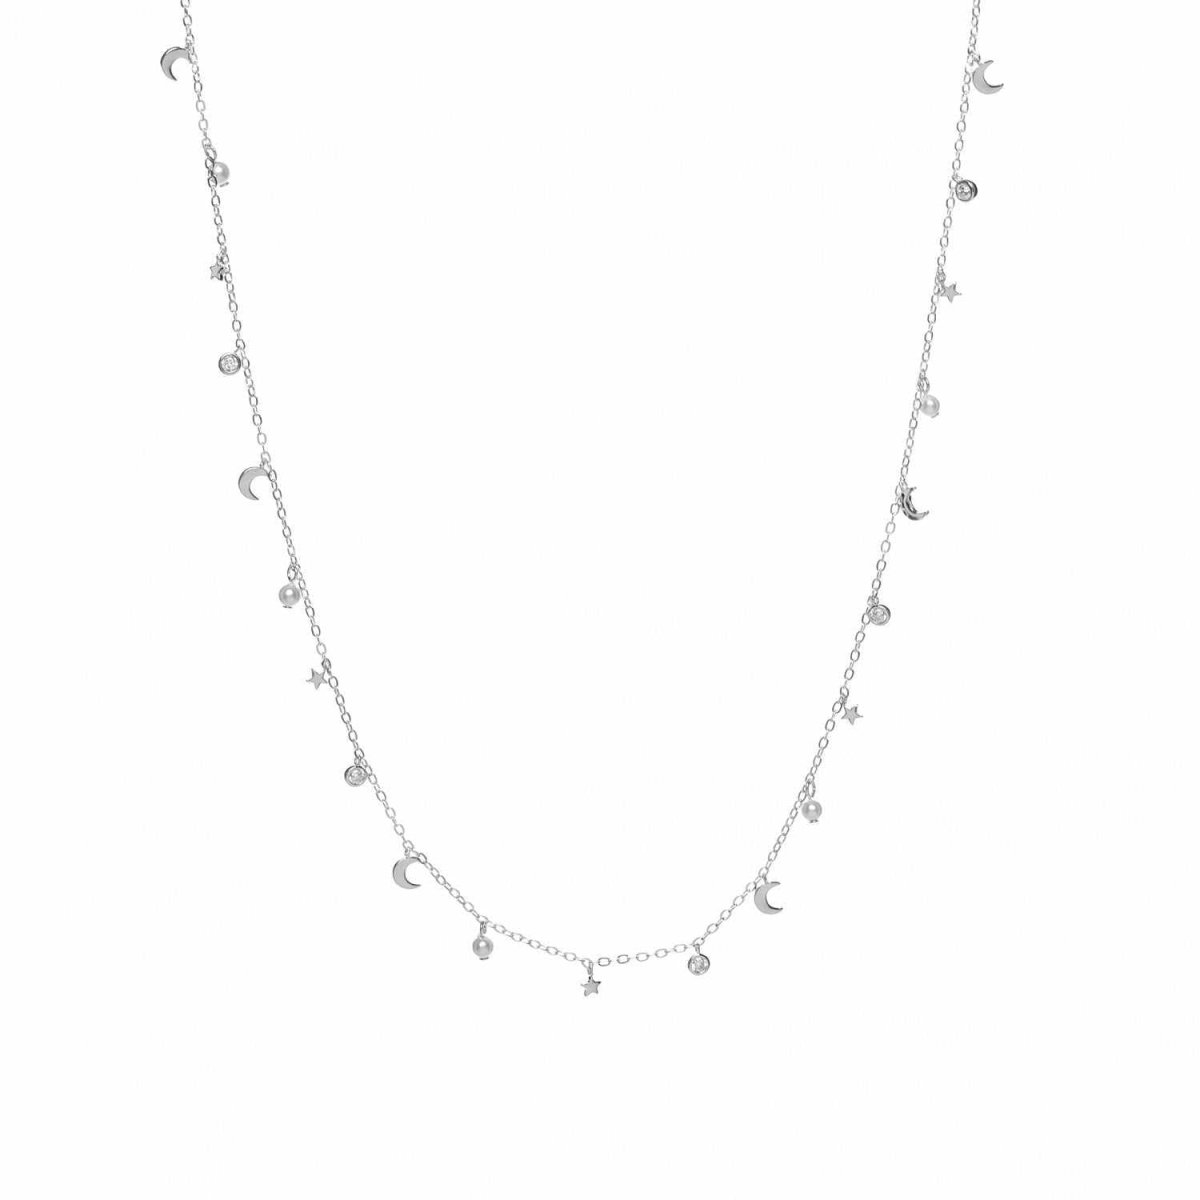 Collar · Collares con colgantes en plata diseño variado